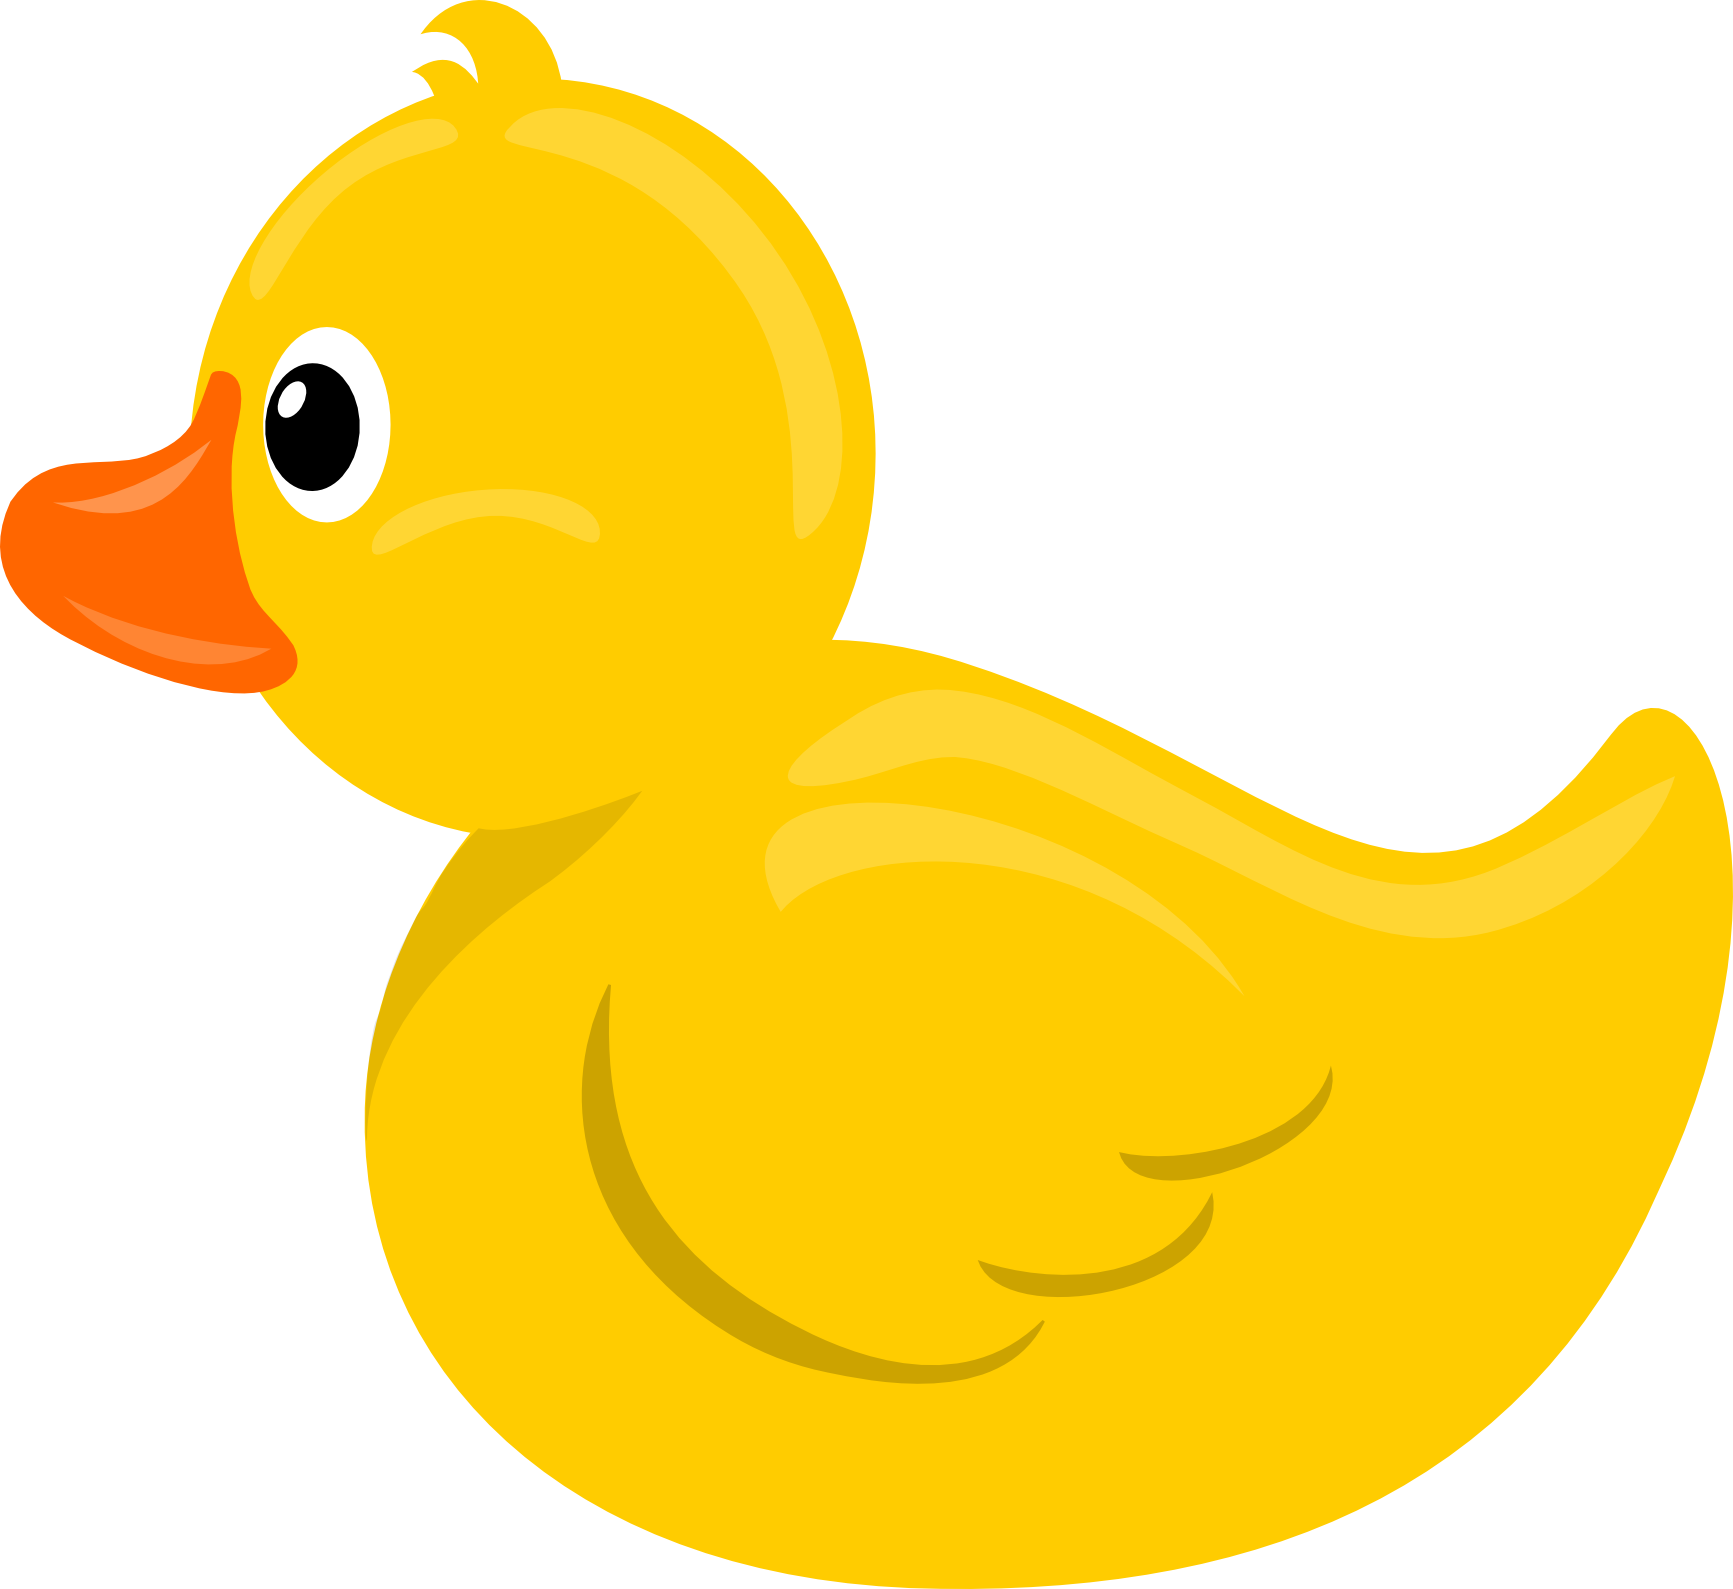 Duck clip artlor free clipart images